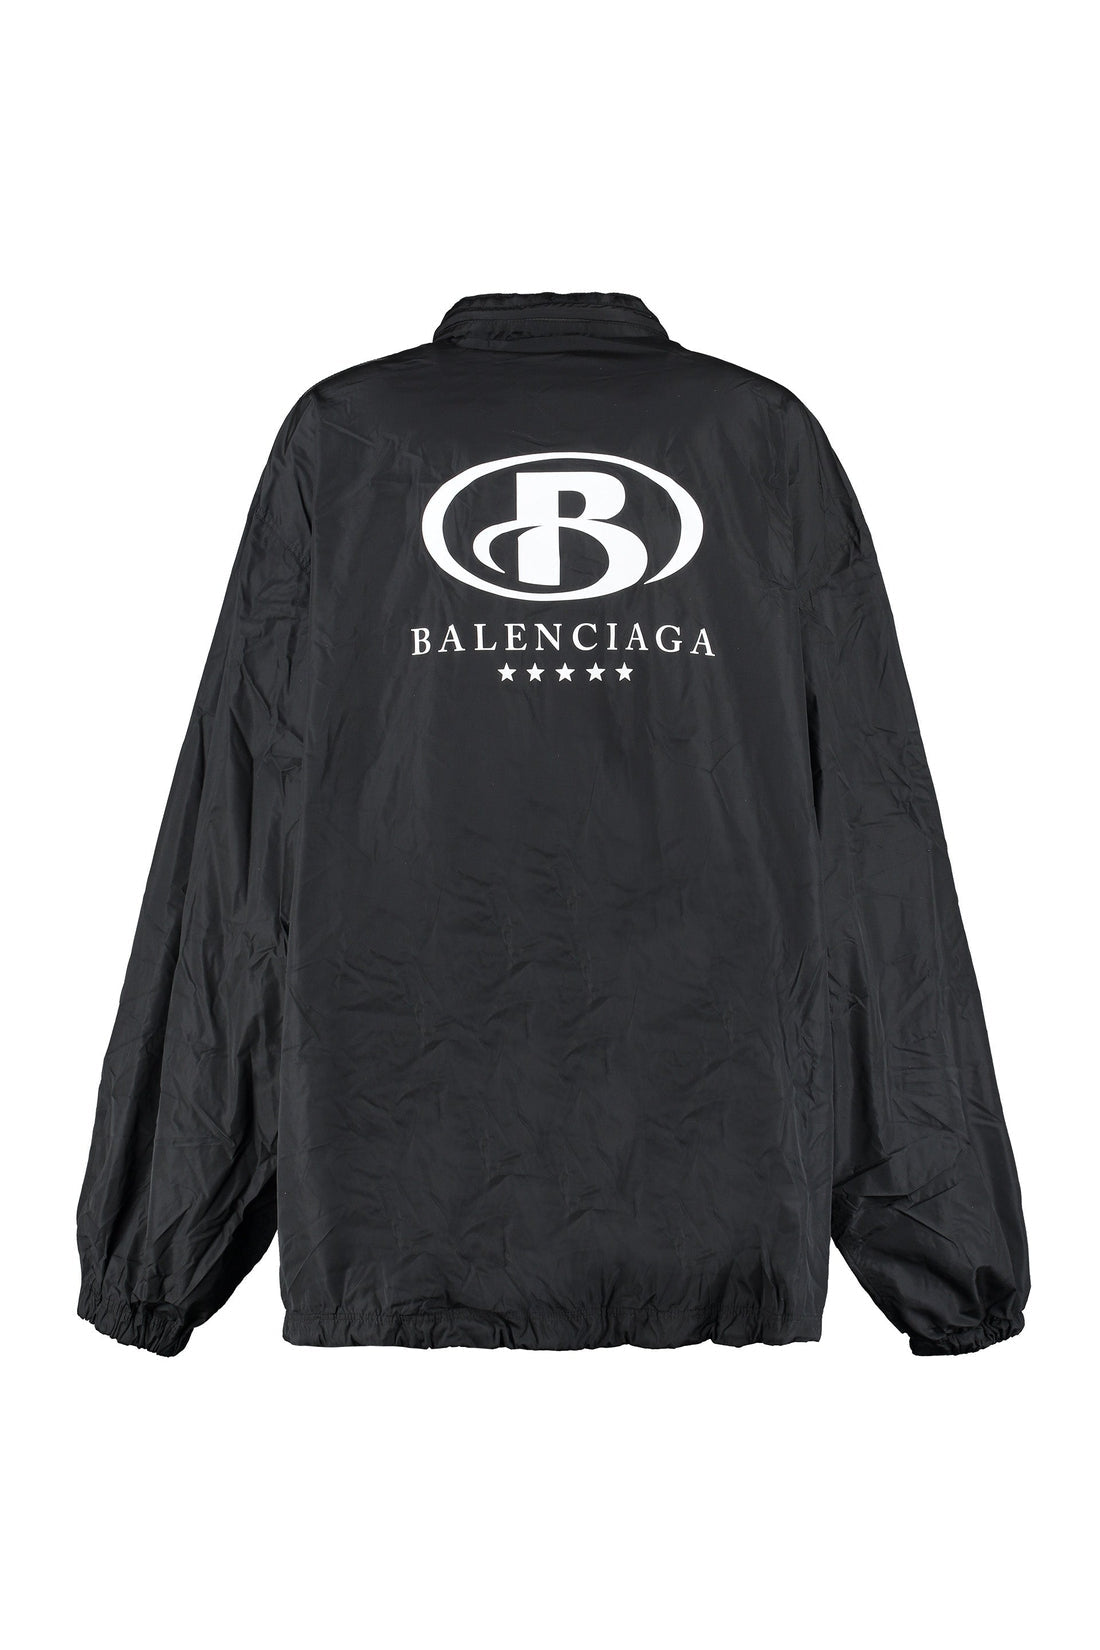 Balenciaga-OUTLET-SALE-Techno fabric jacket-ARCHIVIST